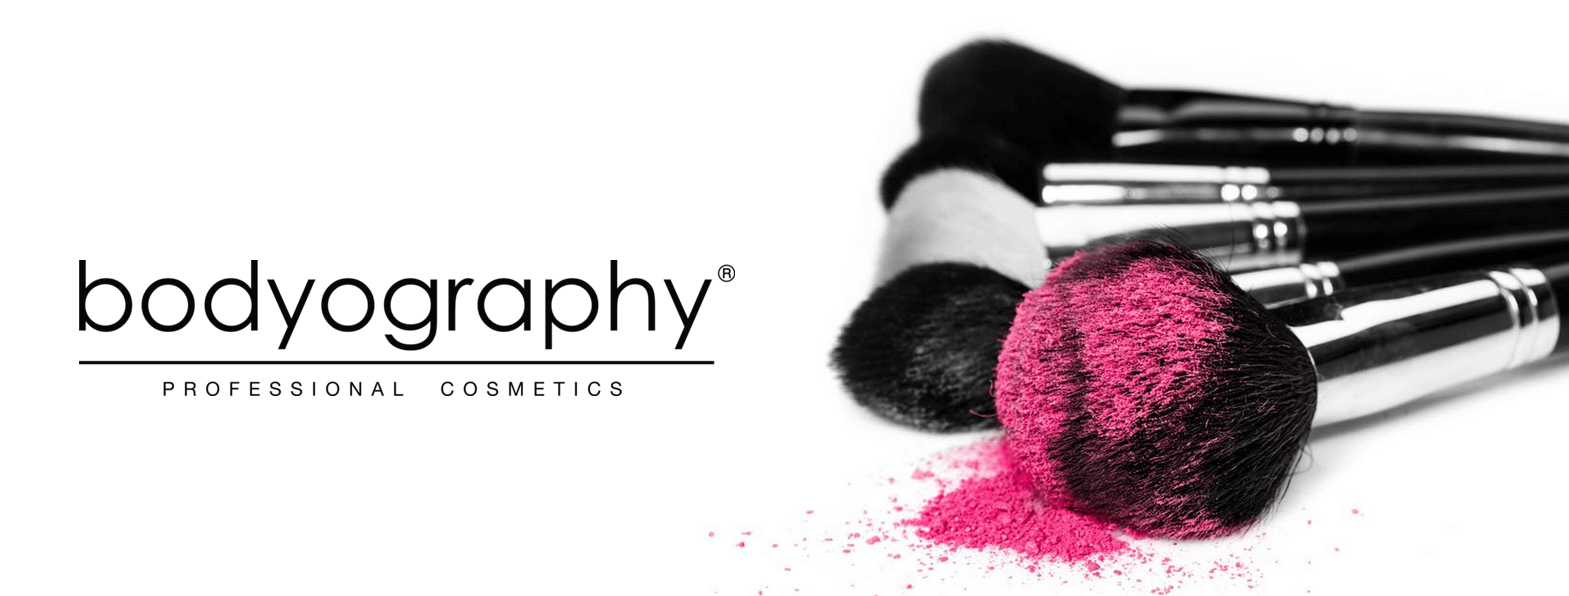 Bodyography Makeup Brushes